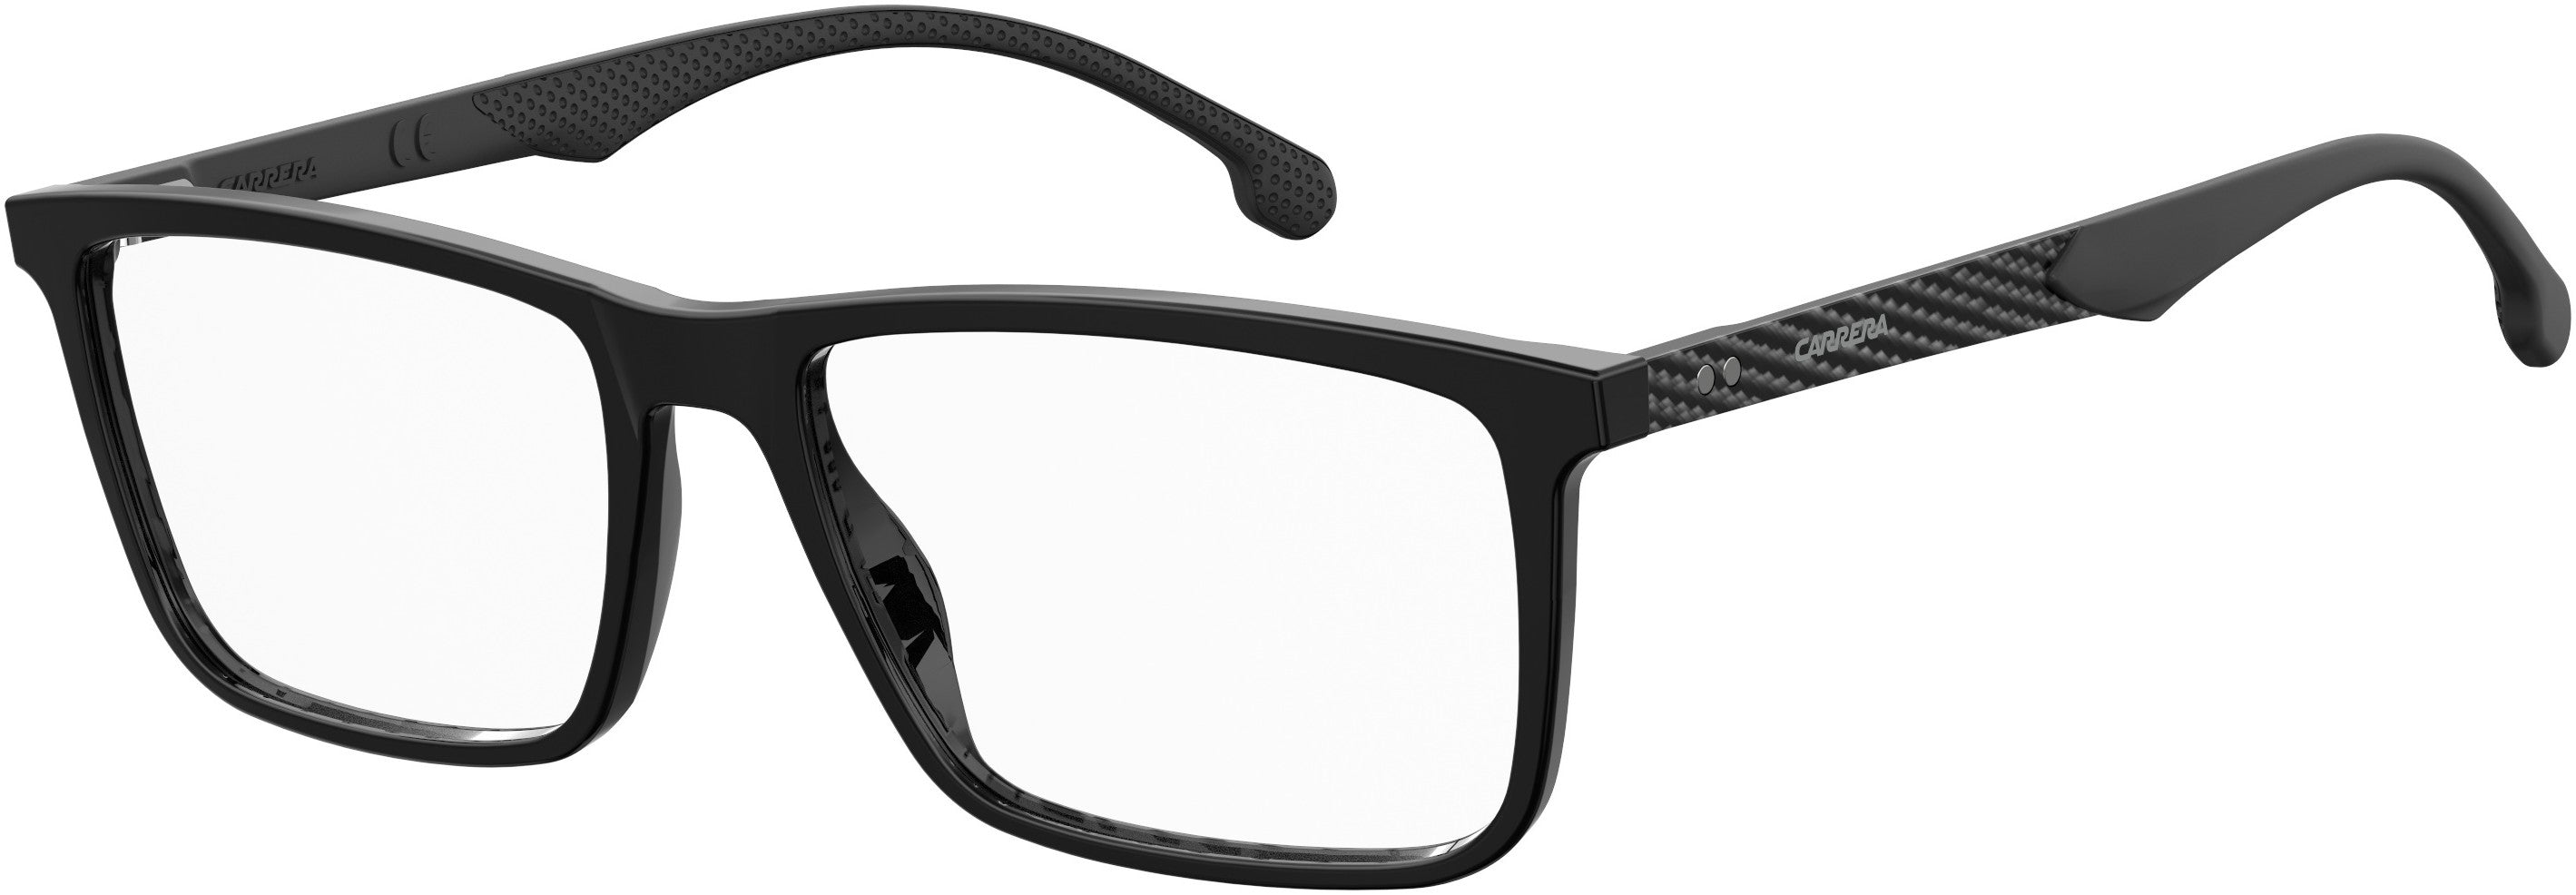  Carrera 8839 Rectangular Eyeglasses 0807-0807  Black (00 Demo Lens)